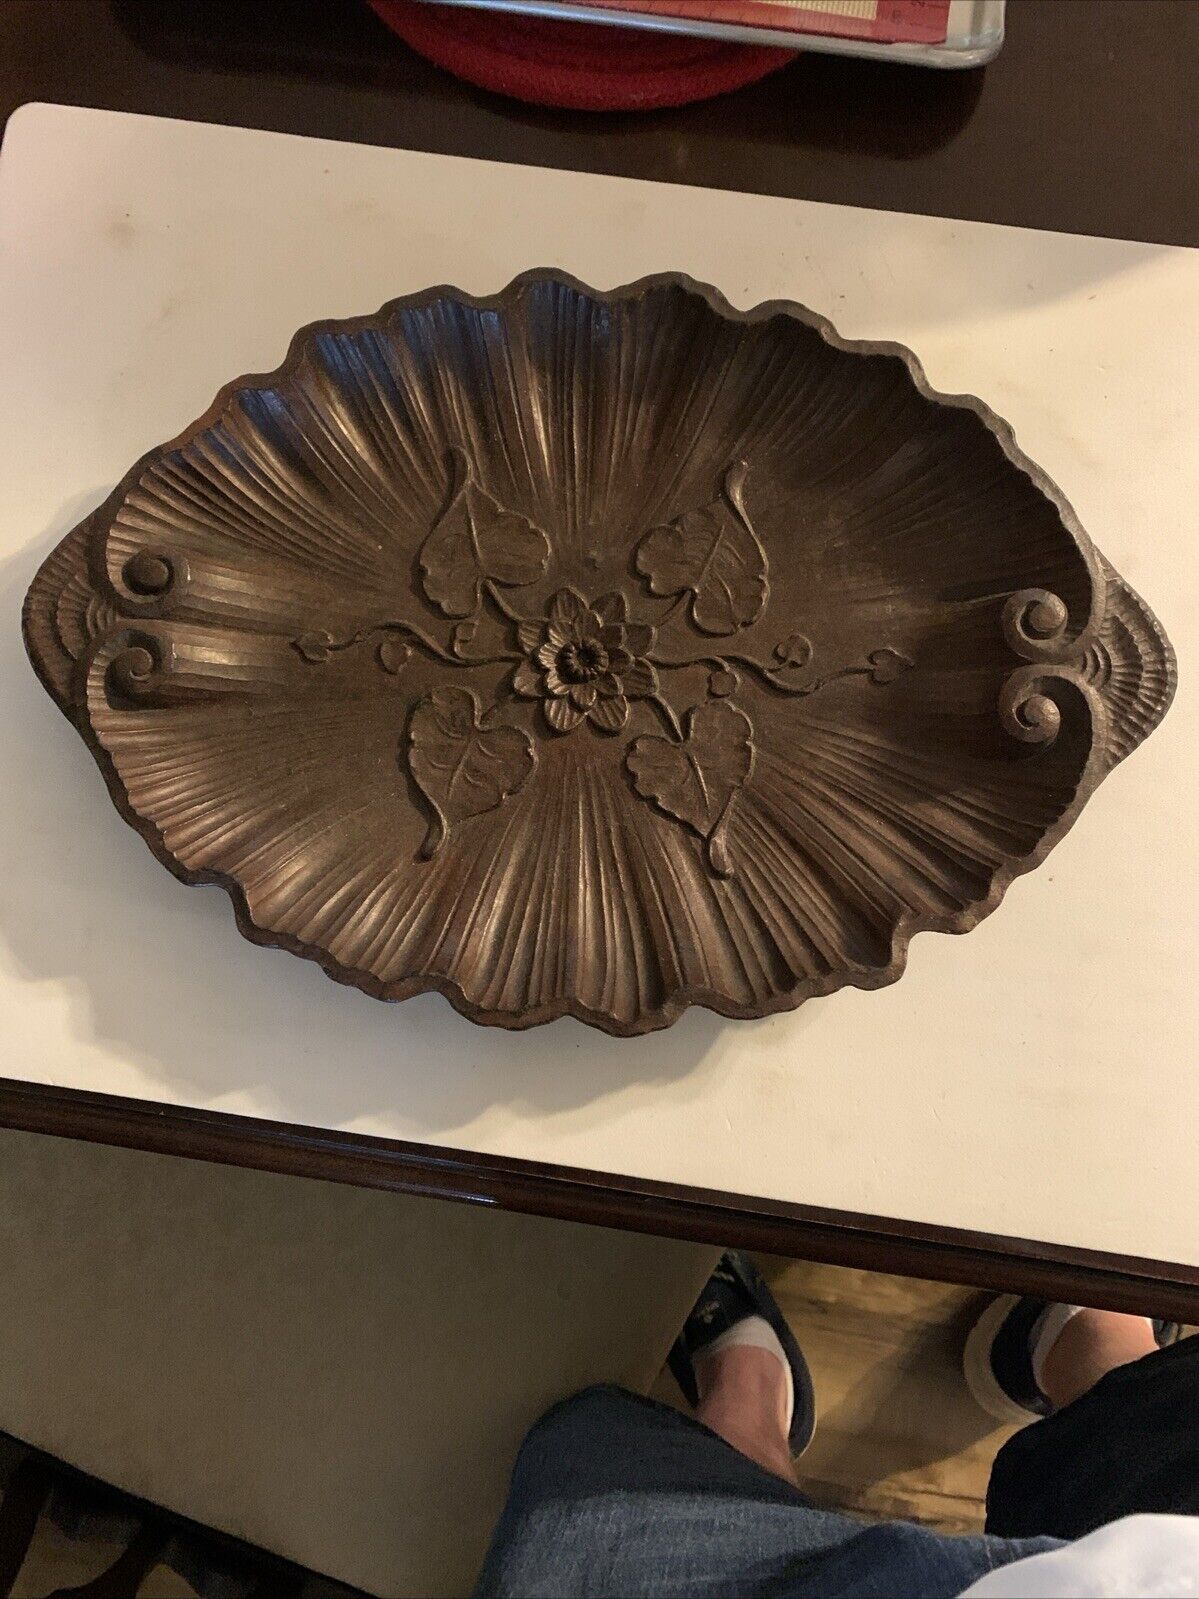 Vintage pressed wood or resin floral serving tray